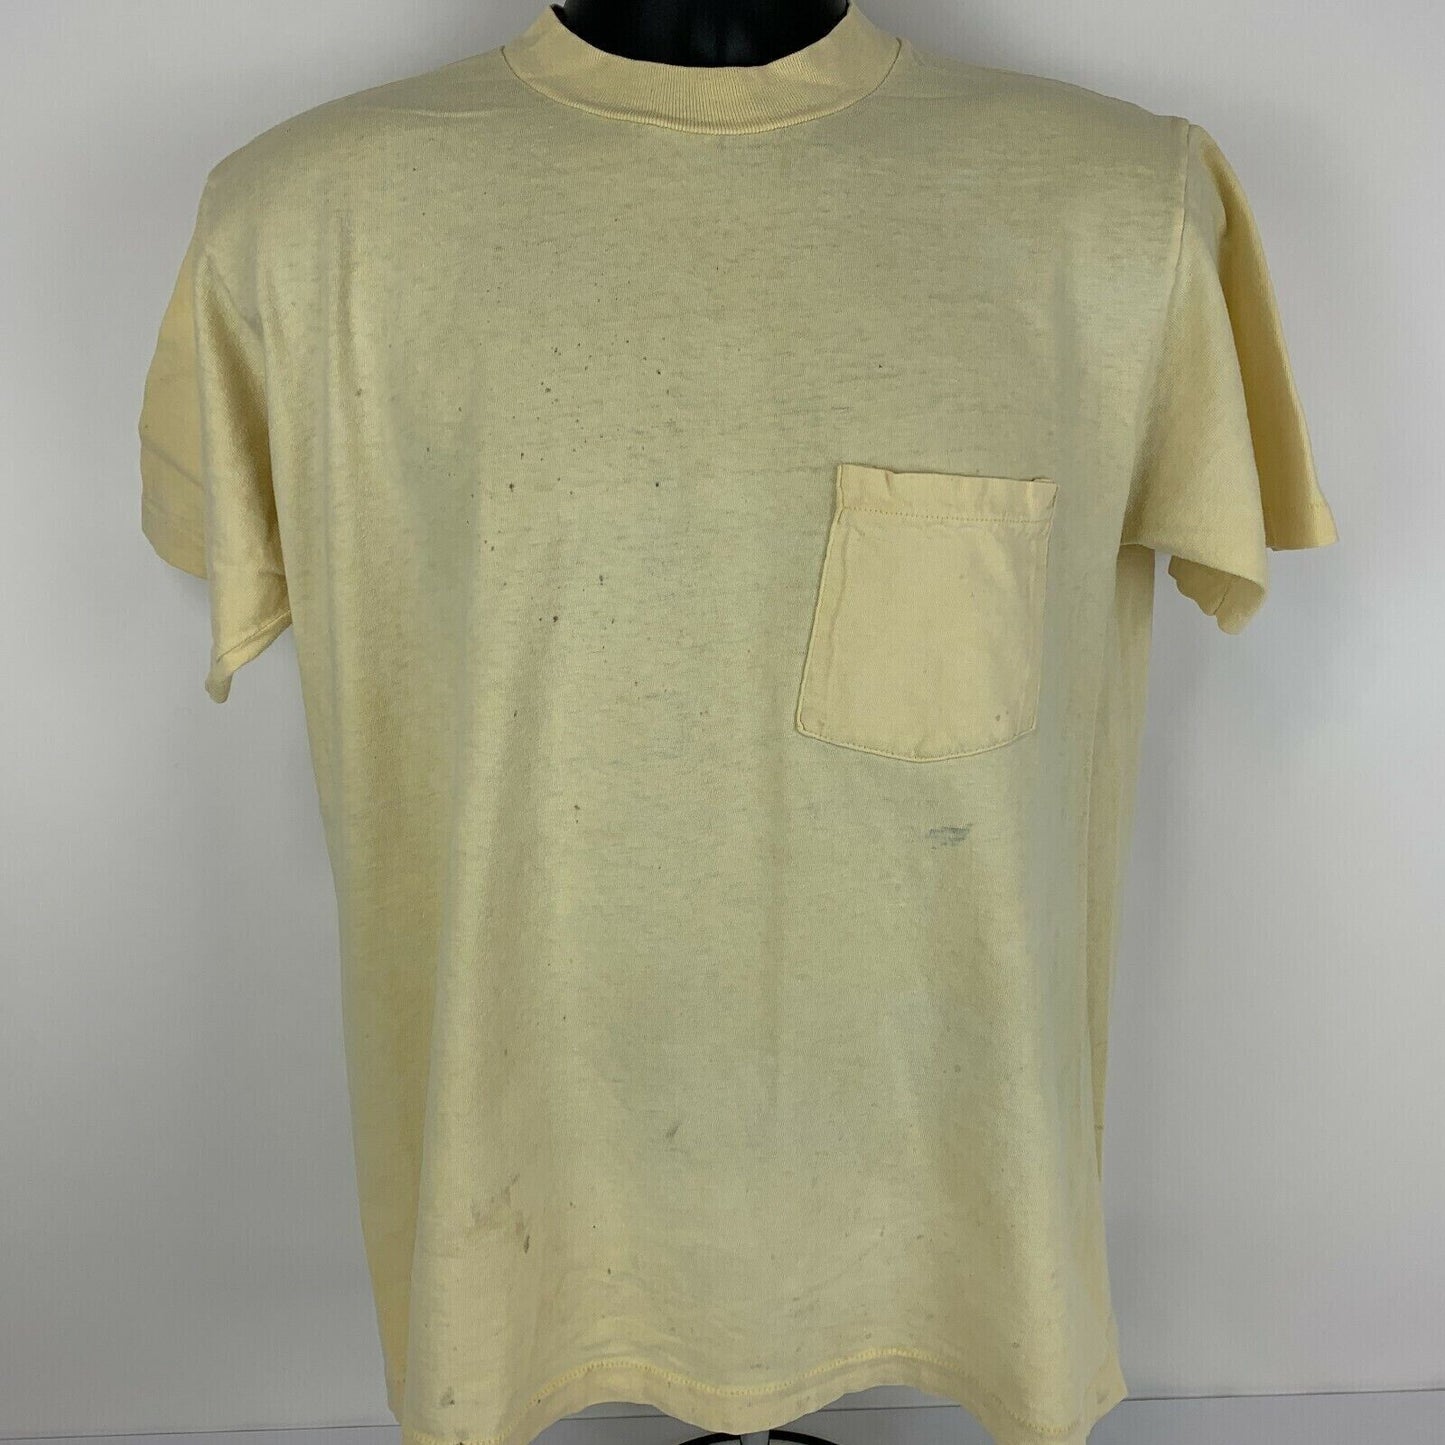 Sky Rider Hot Air Balloon Port Vintage 70s T Shirt Large Orlando Tee Mens Yellow